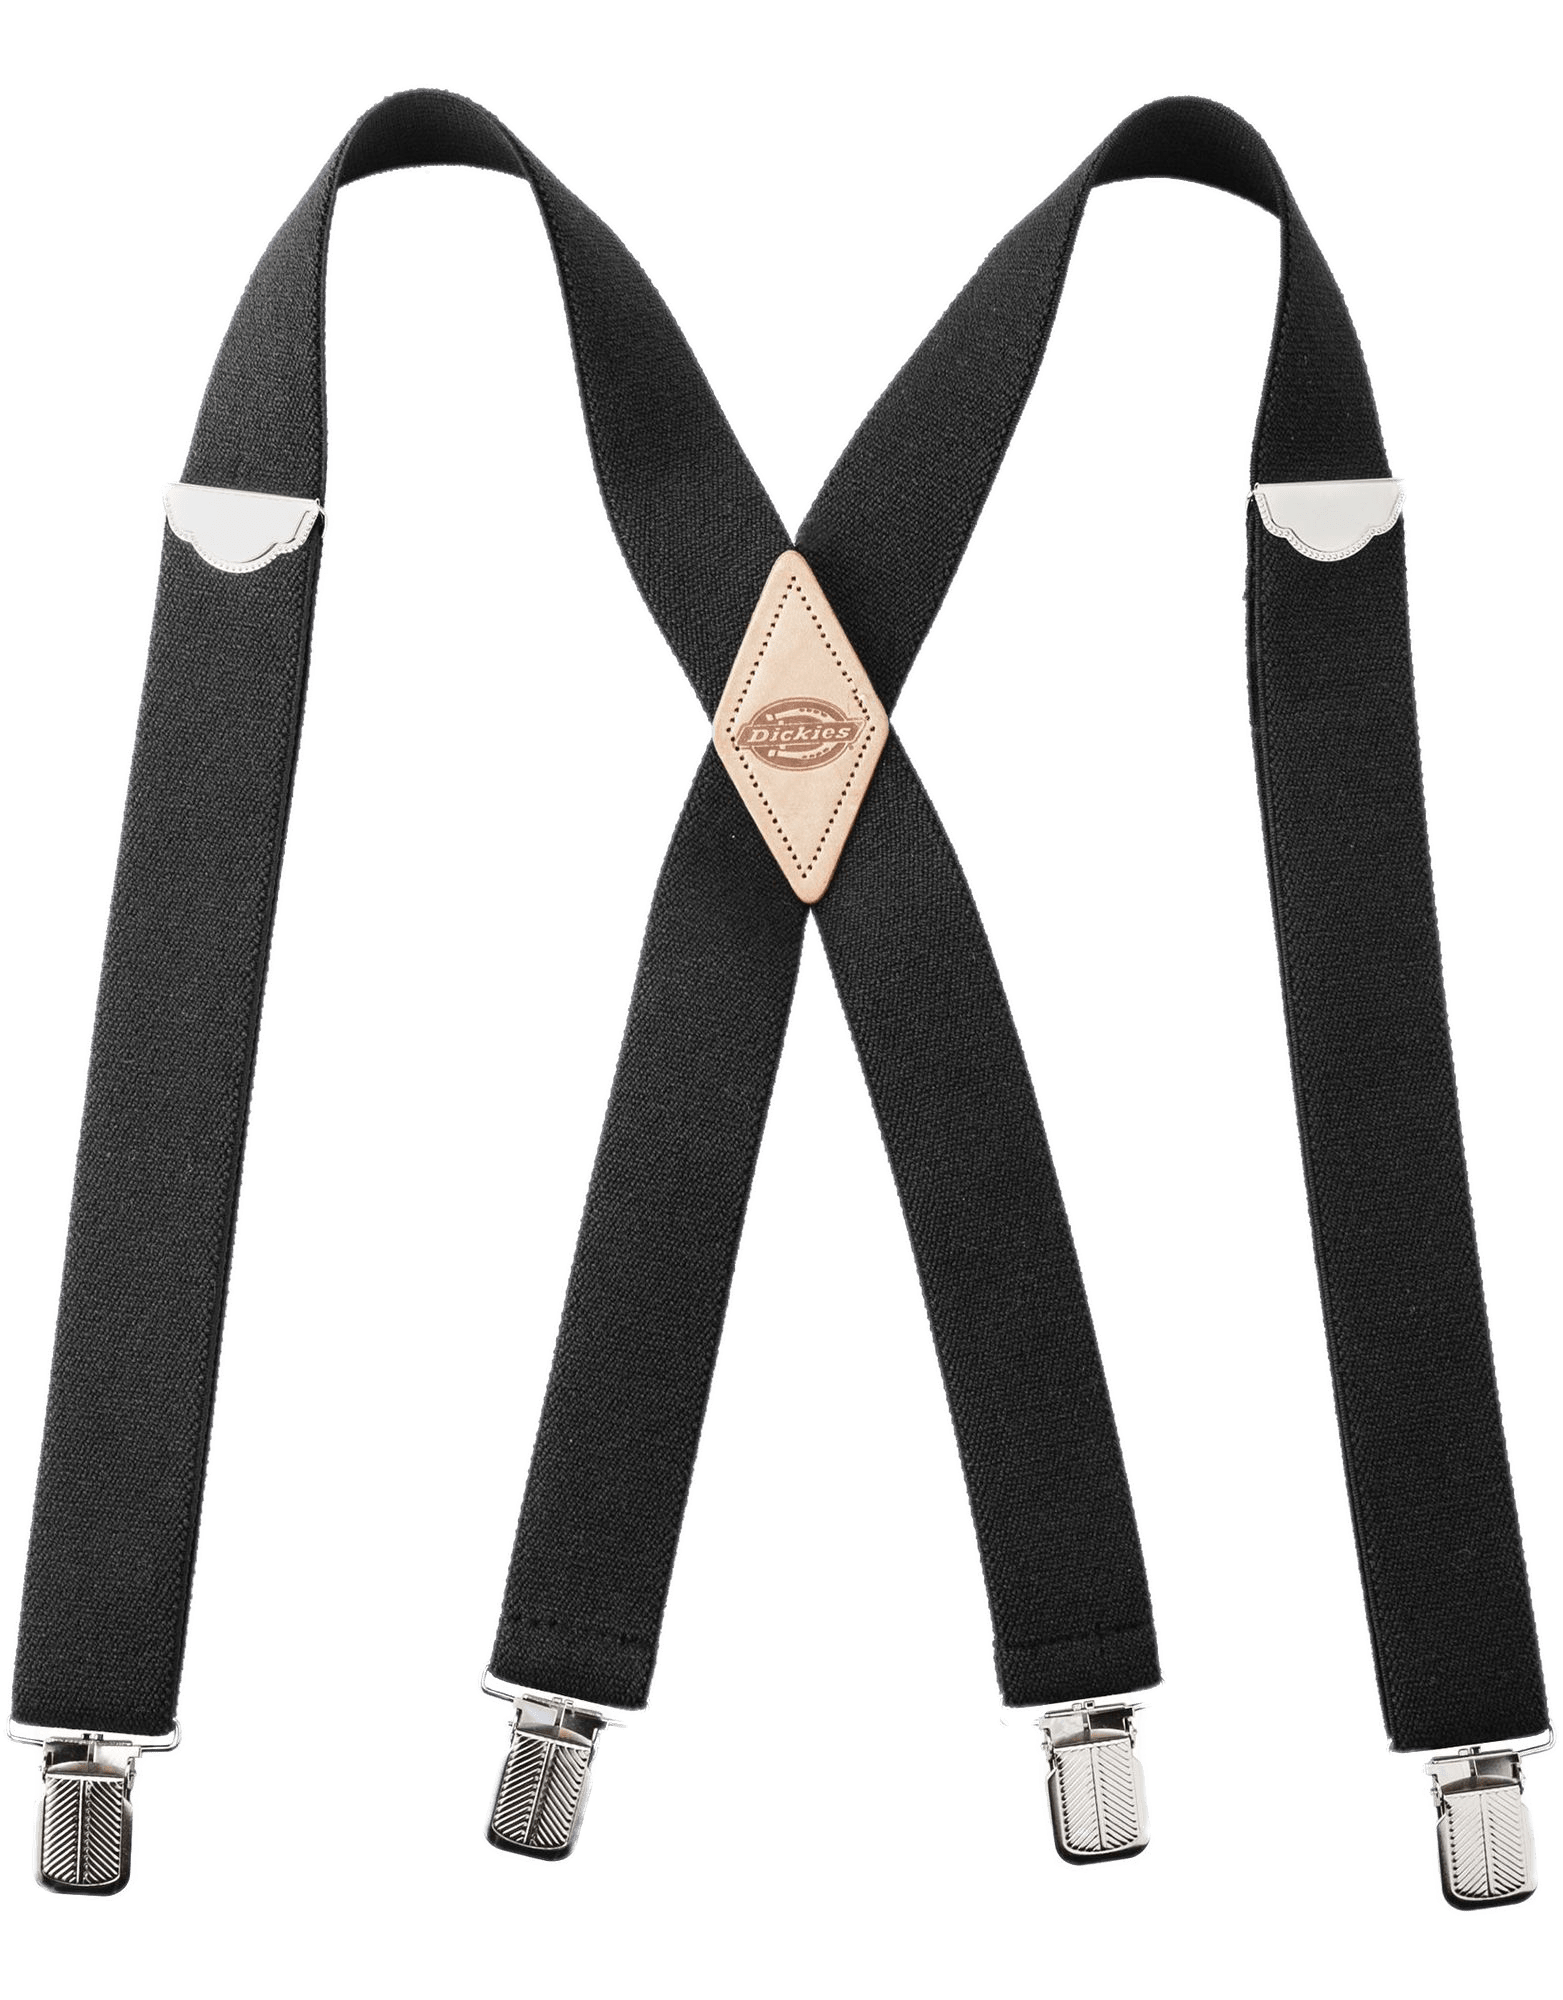 Work Suspenders PNG images